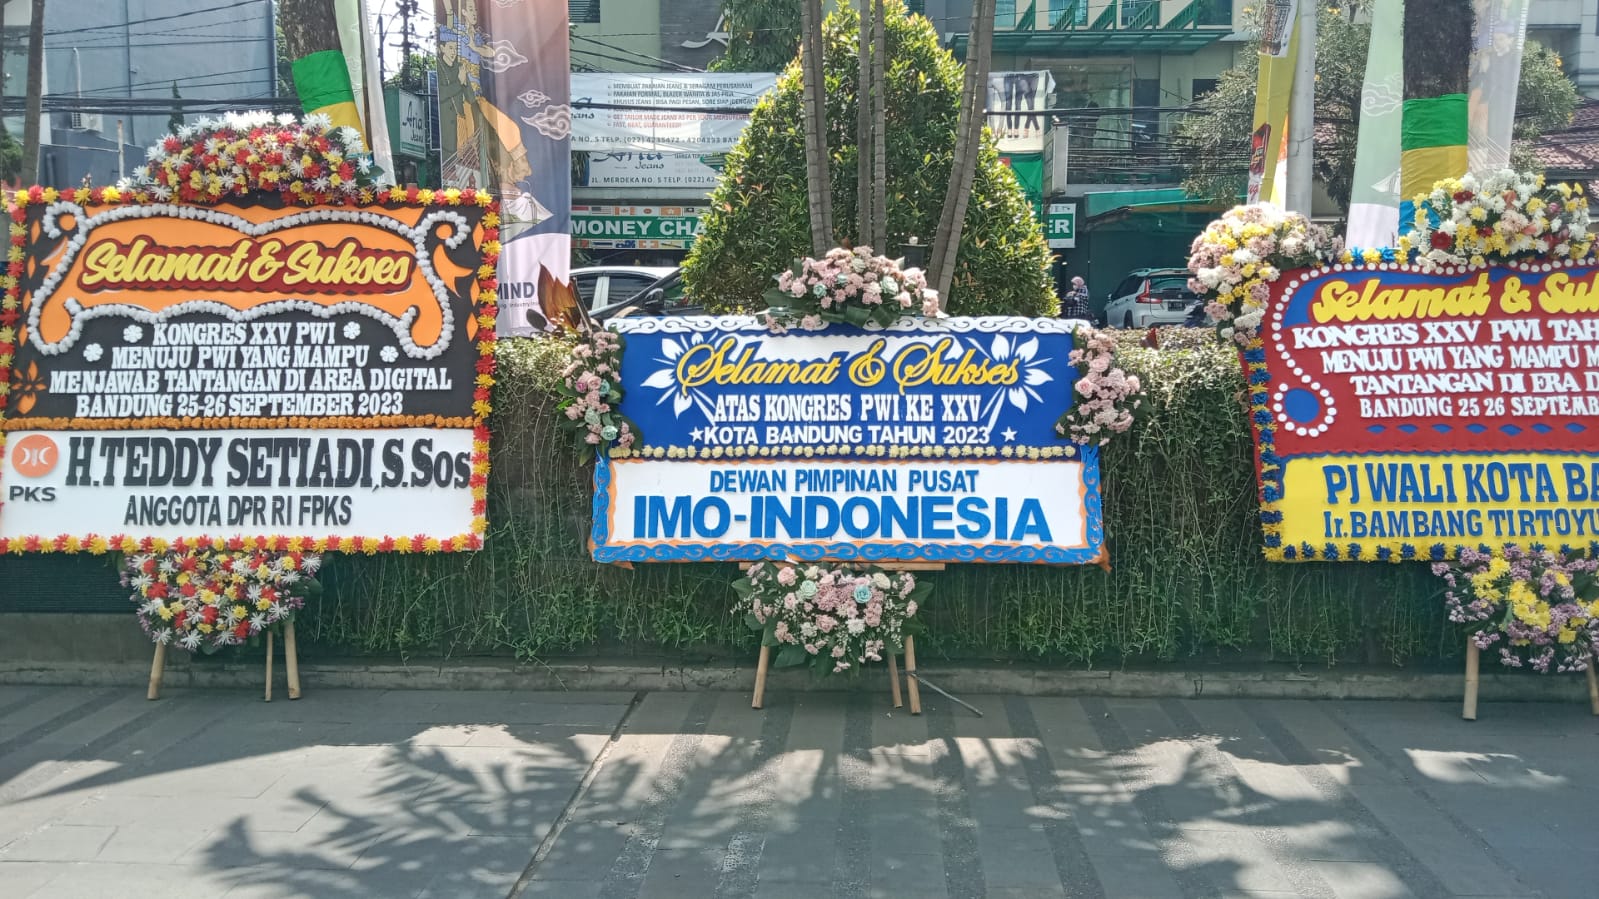 IMO-Indonesia